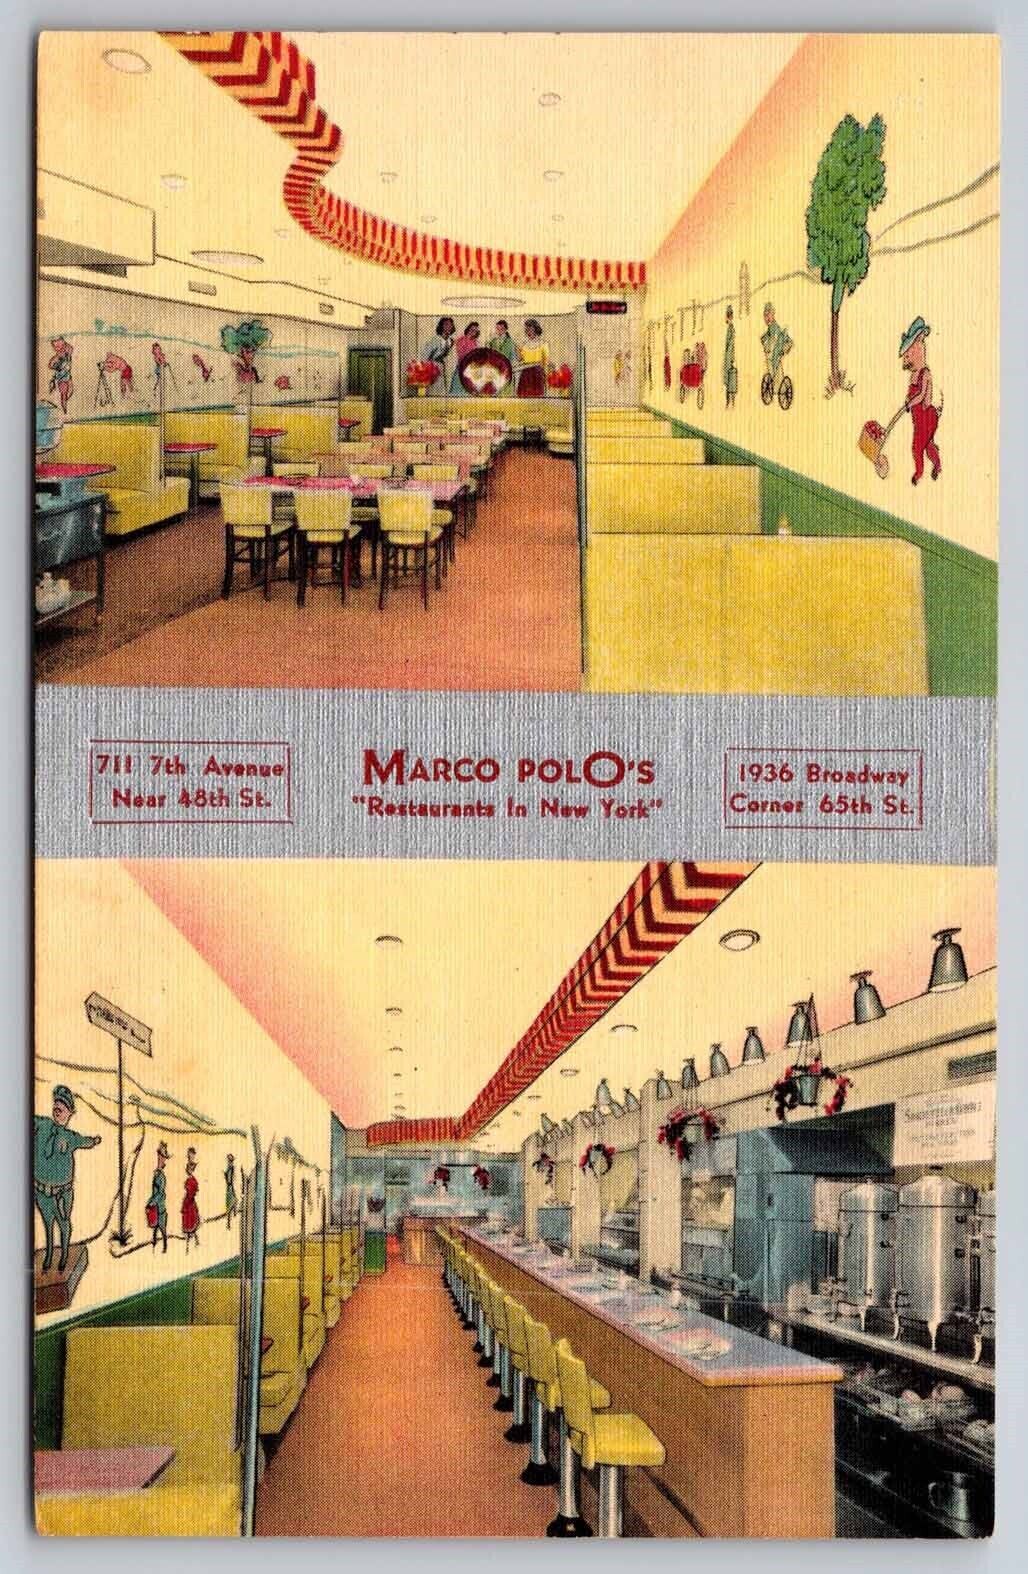 eStampsNet - Marco Polo's Restaurants in New York Postcard